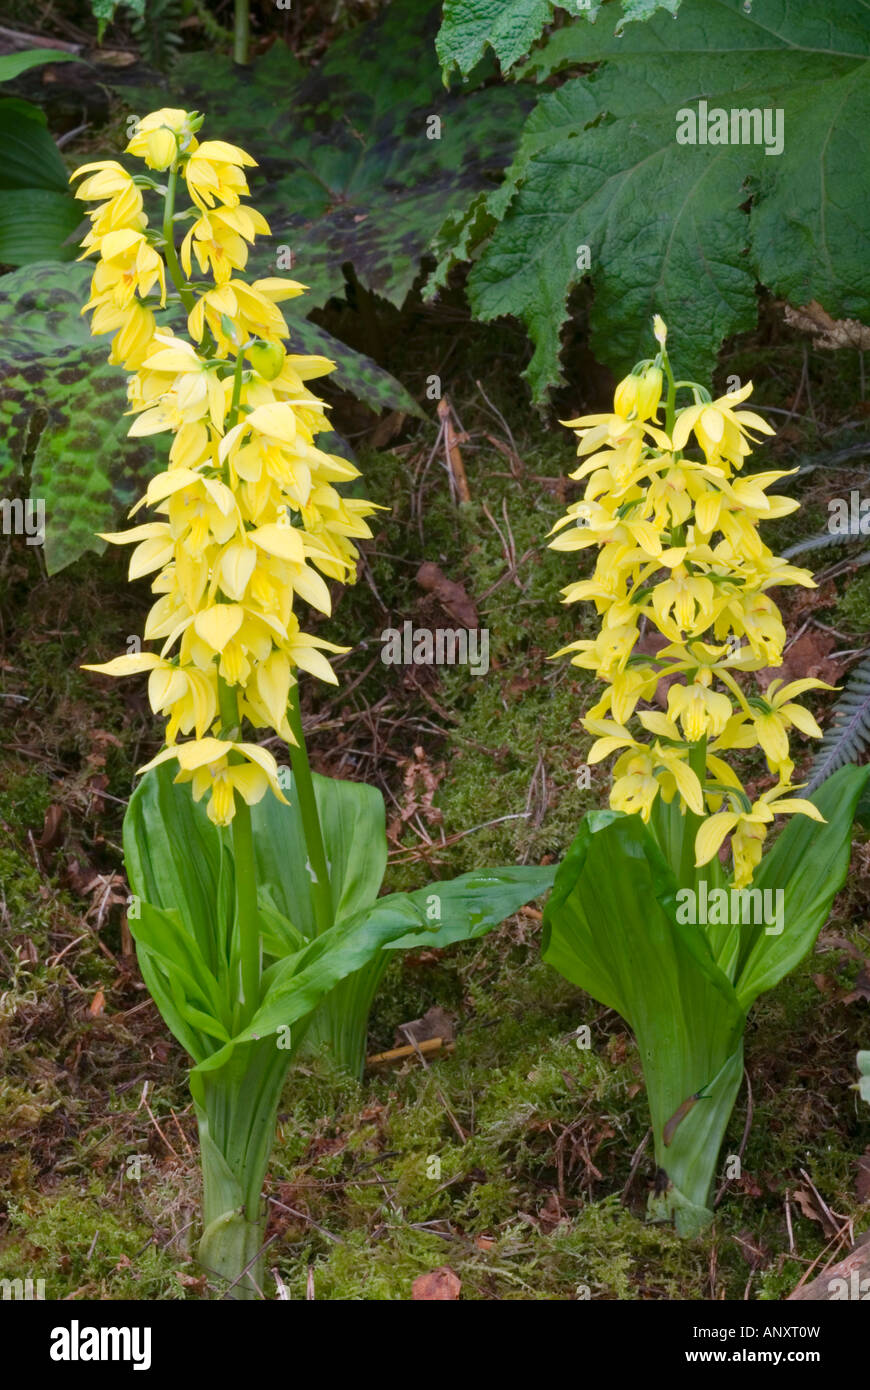 Calanthe sieboldii winterharte Orchideen Gelb Ebine in Boden, Pflanze  Gewohnheit in Garten Stockfotografie - Alamy